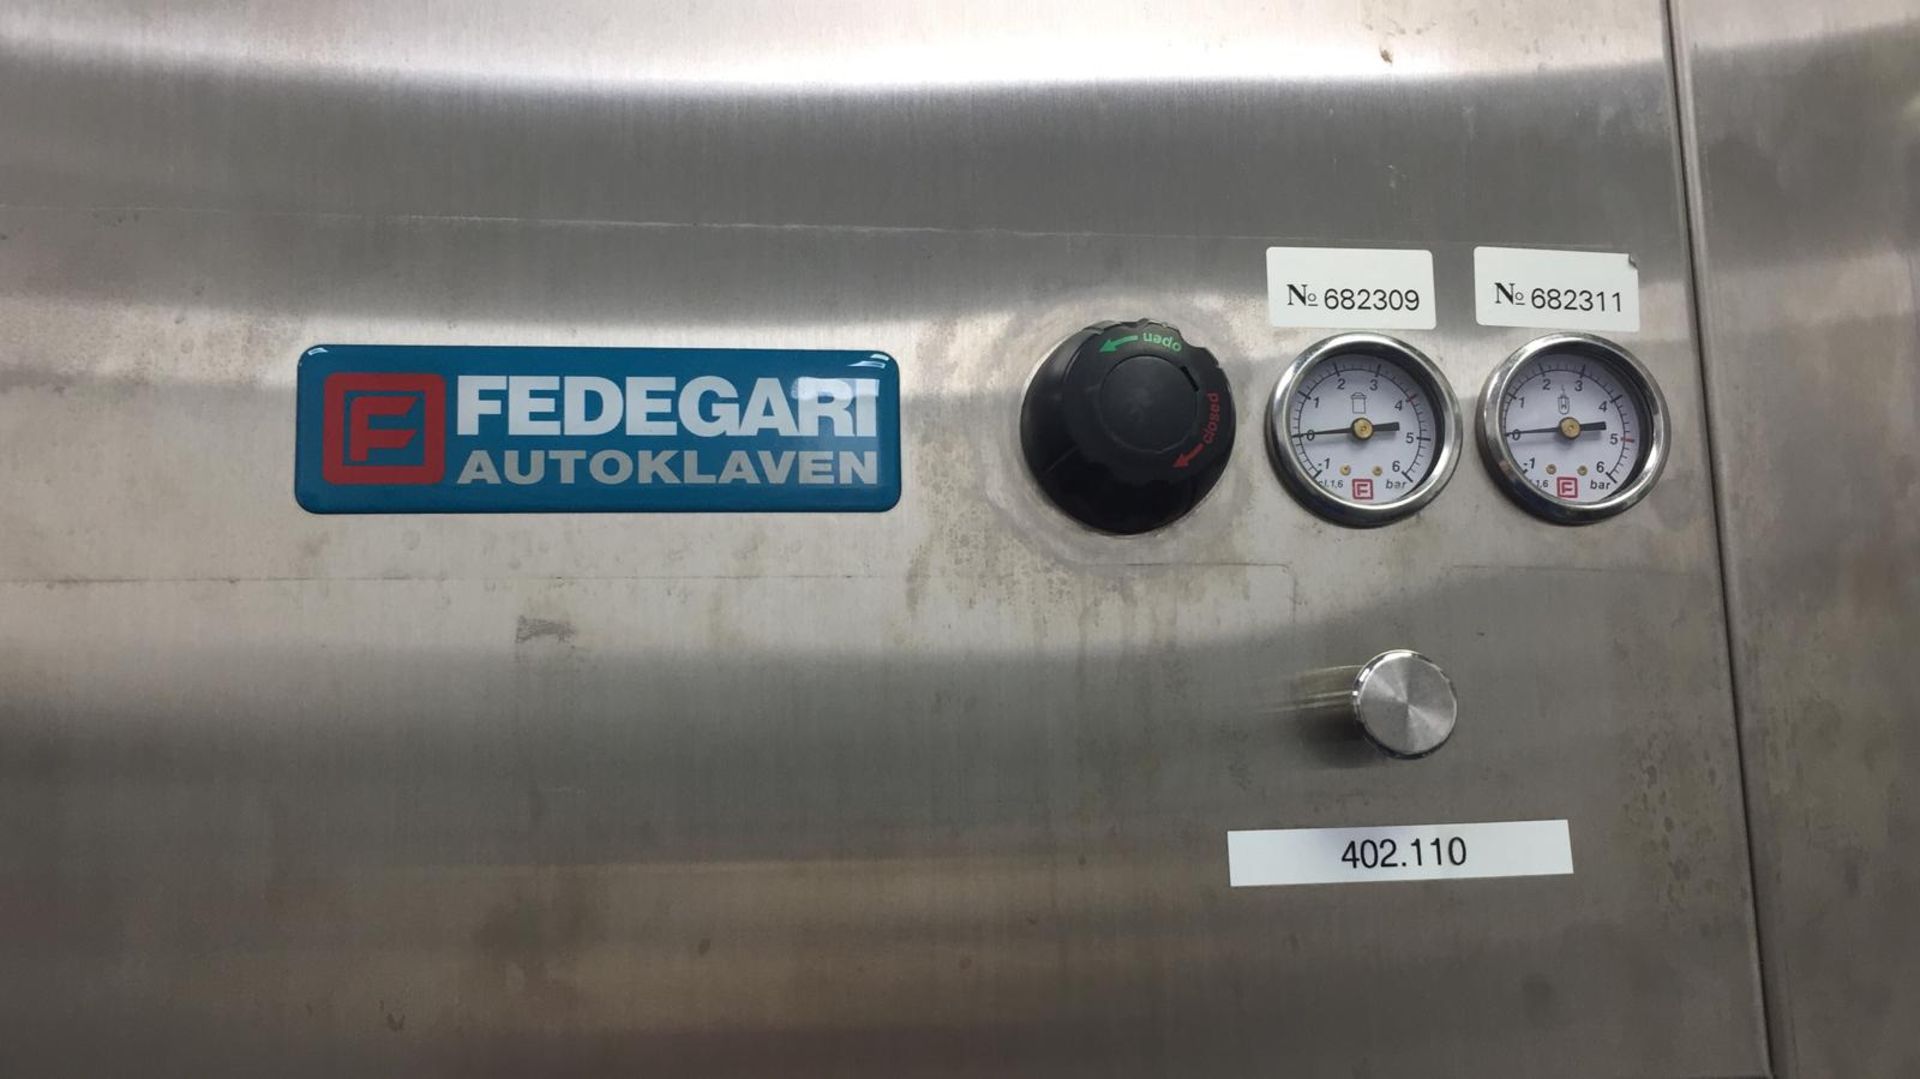 Fedegari autoclave - Image 3 of 5